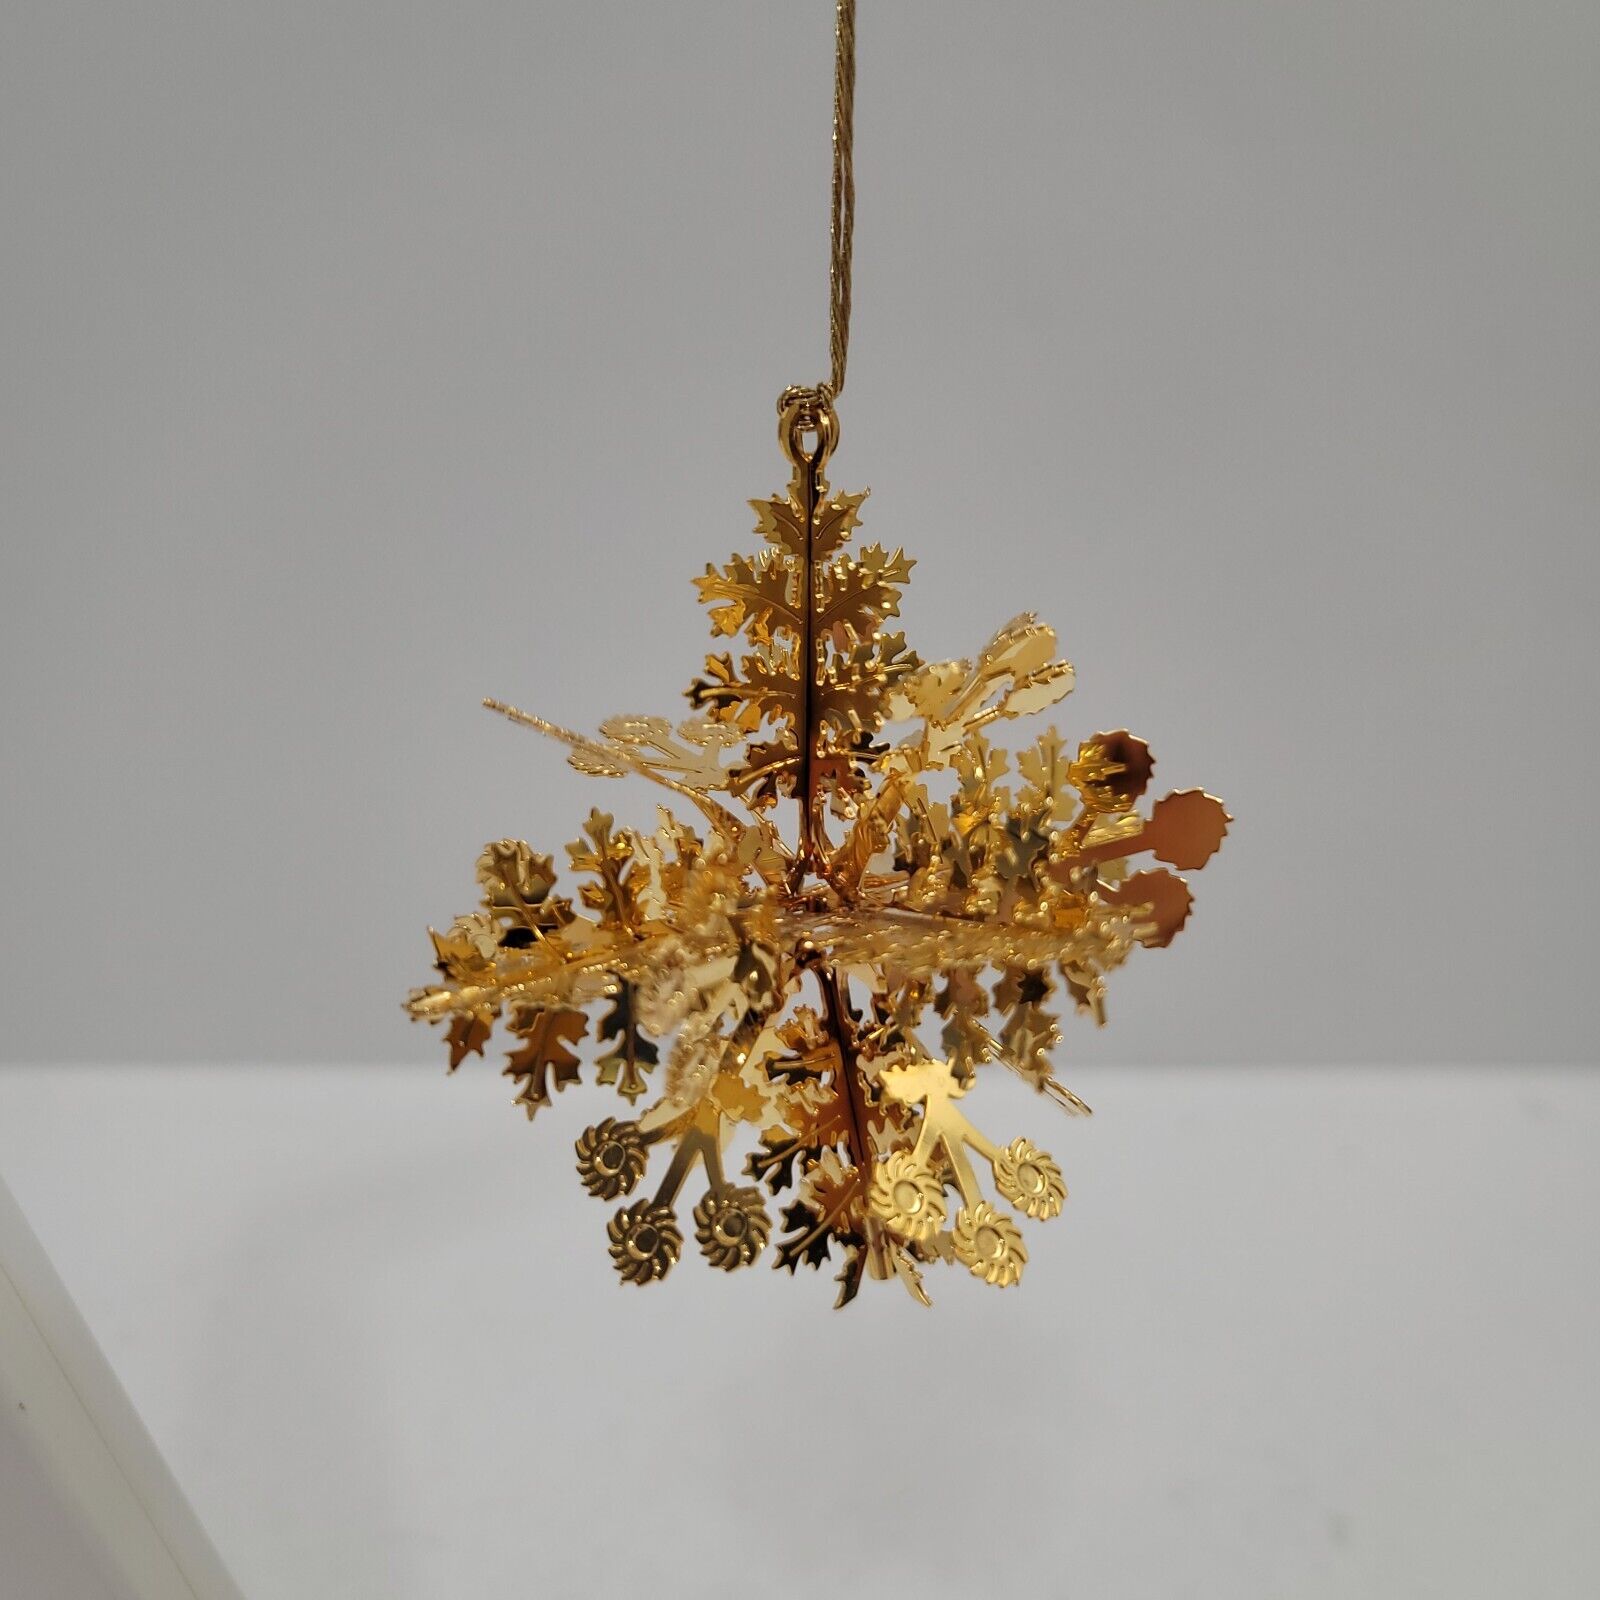 Three Dimensional 3D Goldplate Christmas Ornament By Metropolitan Museum